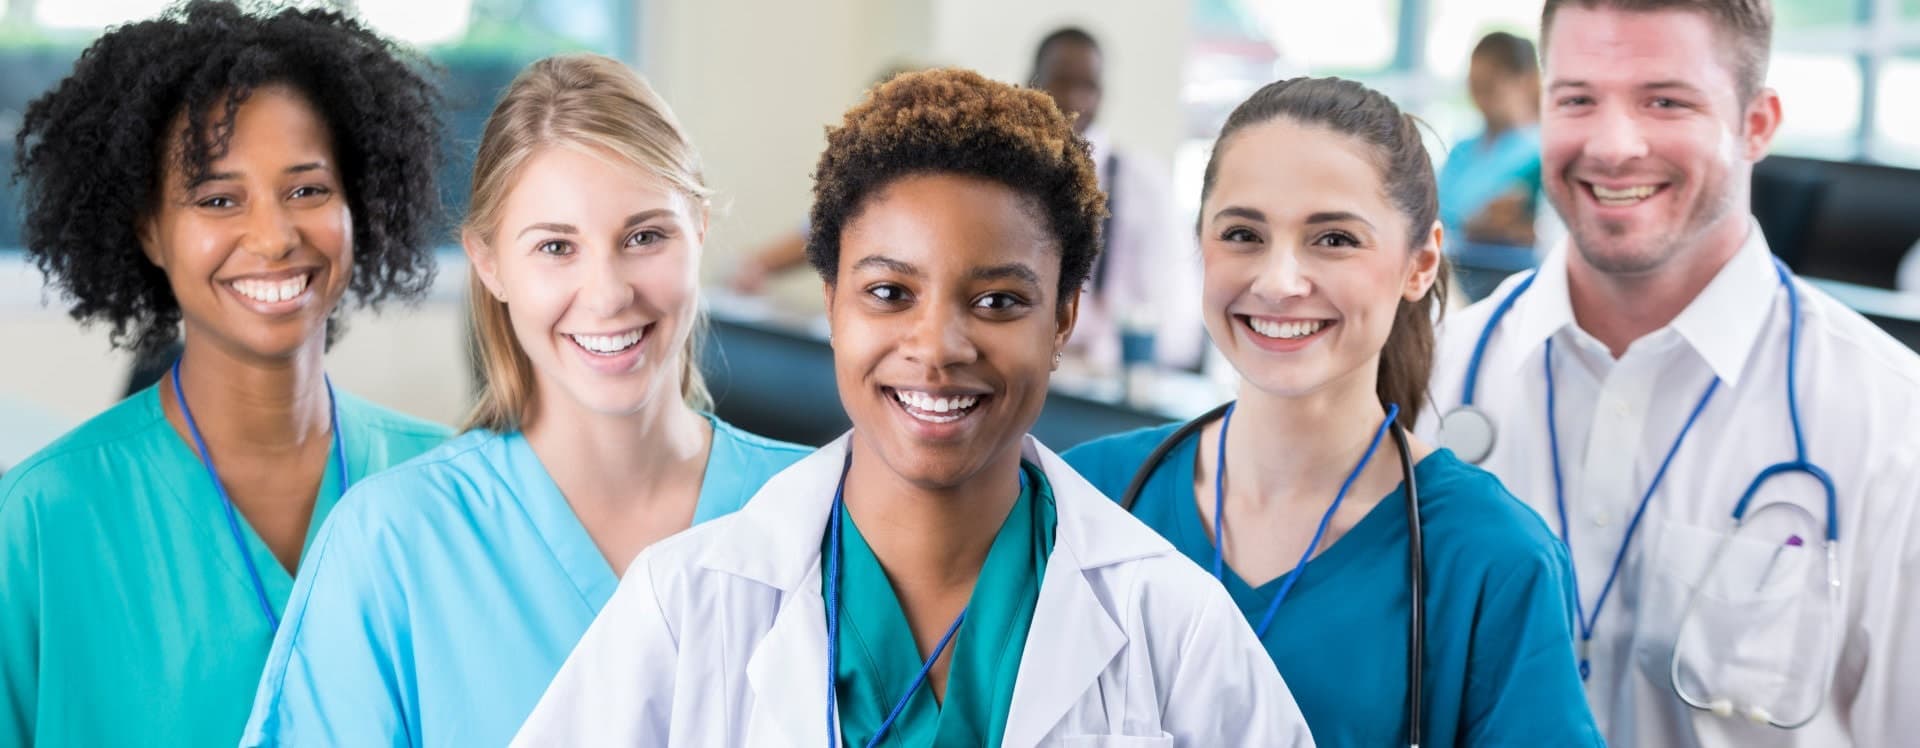 medical employees smiling